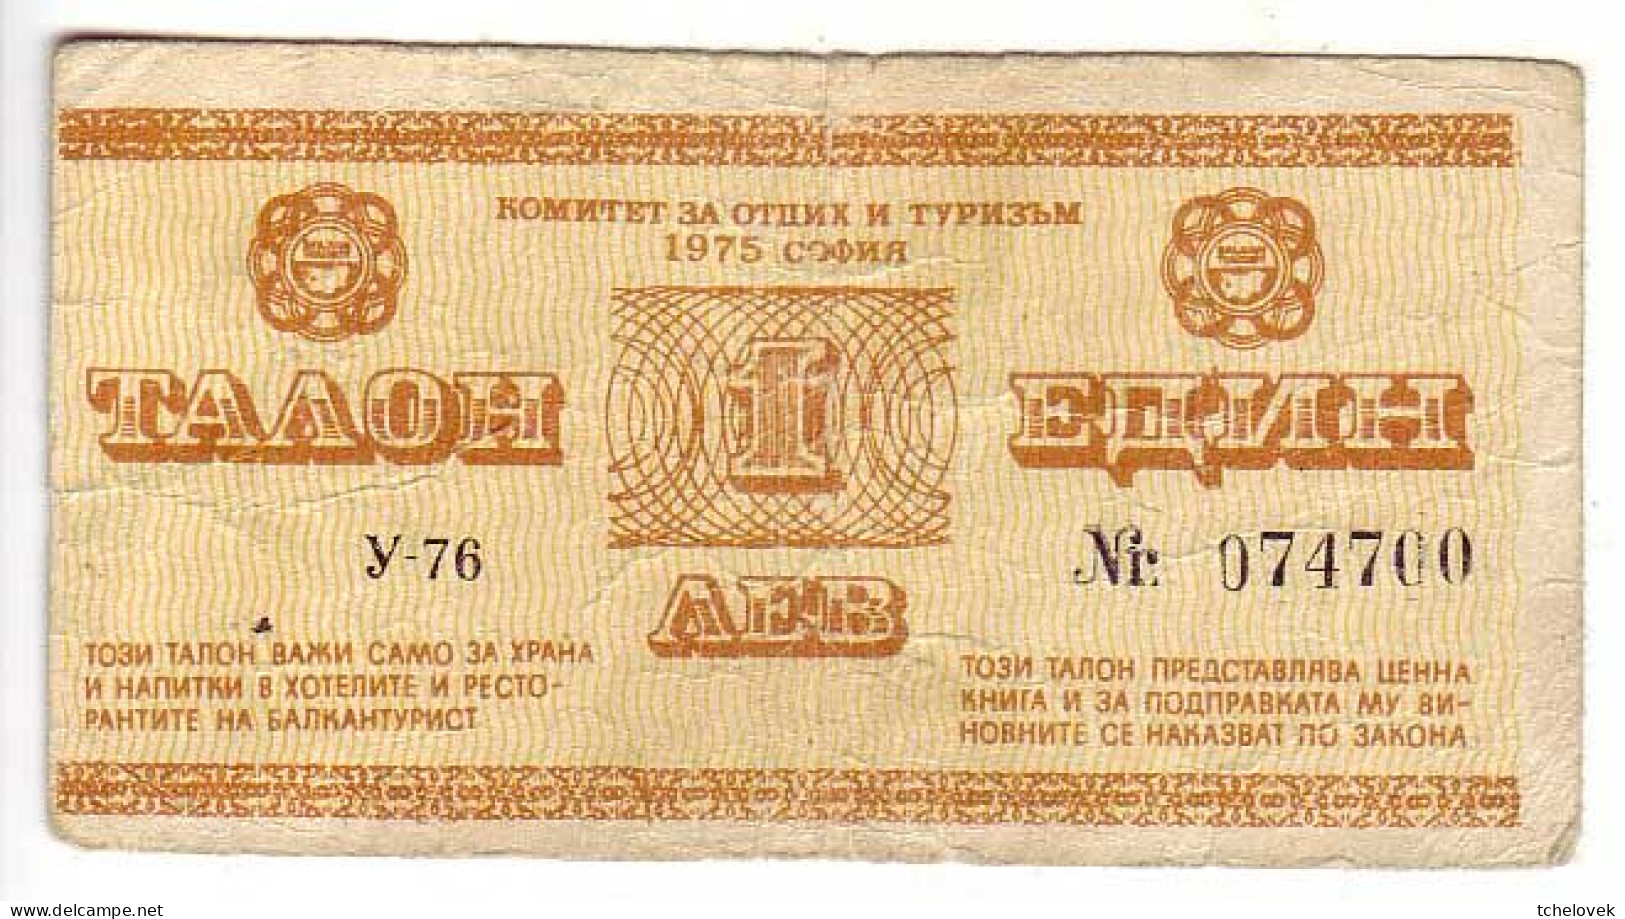 (Billets). Bulgarie Bulgaria. Foreing Exchange Certificate. Balkan Tourist. 1975. 1 Lev Ou-76 N° 074700 Fancy Number - Bulgarie